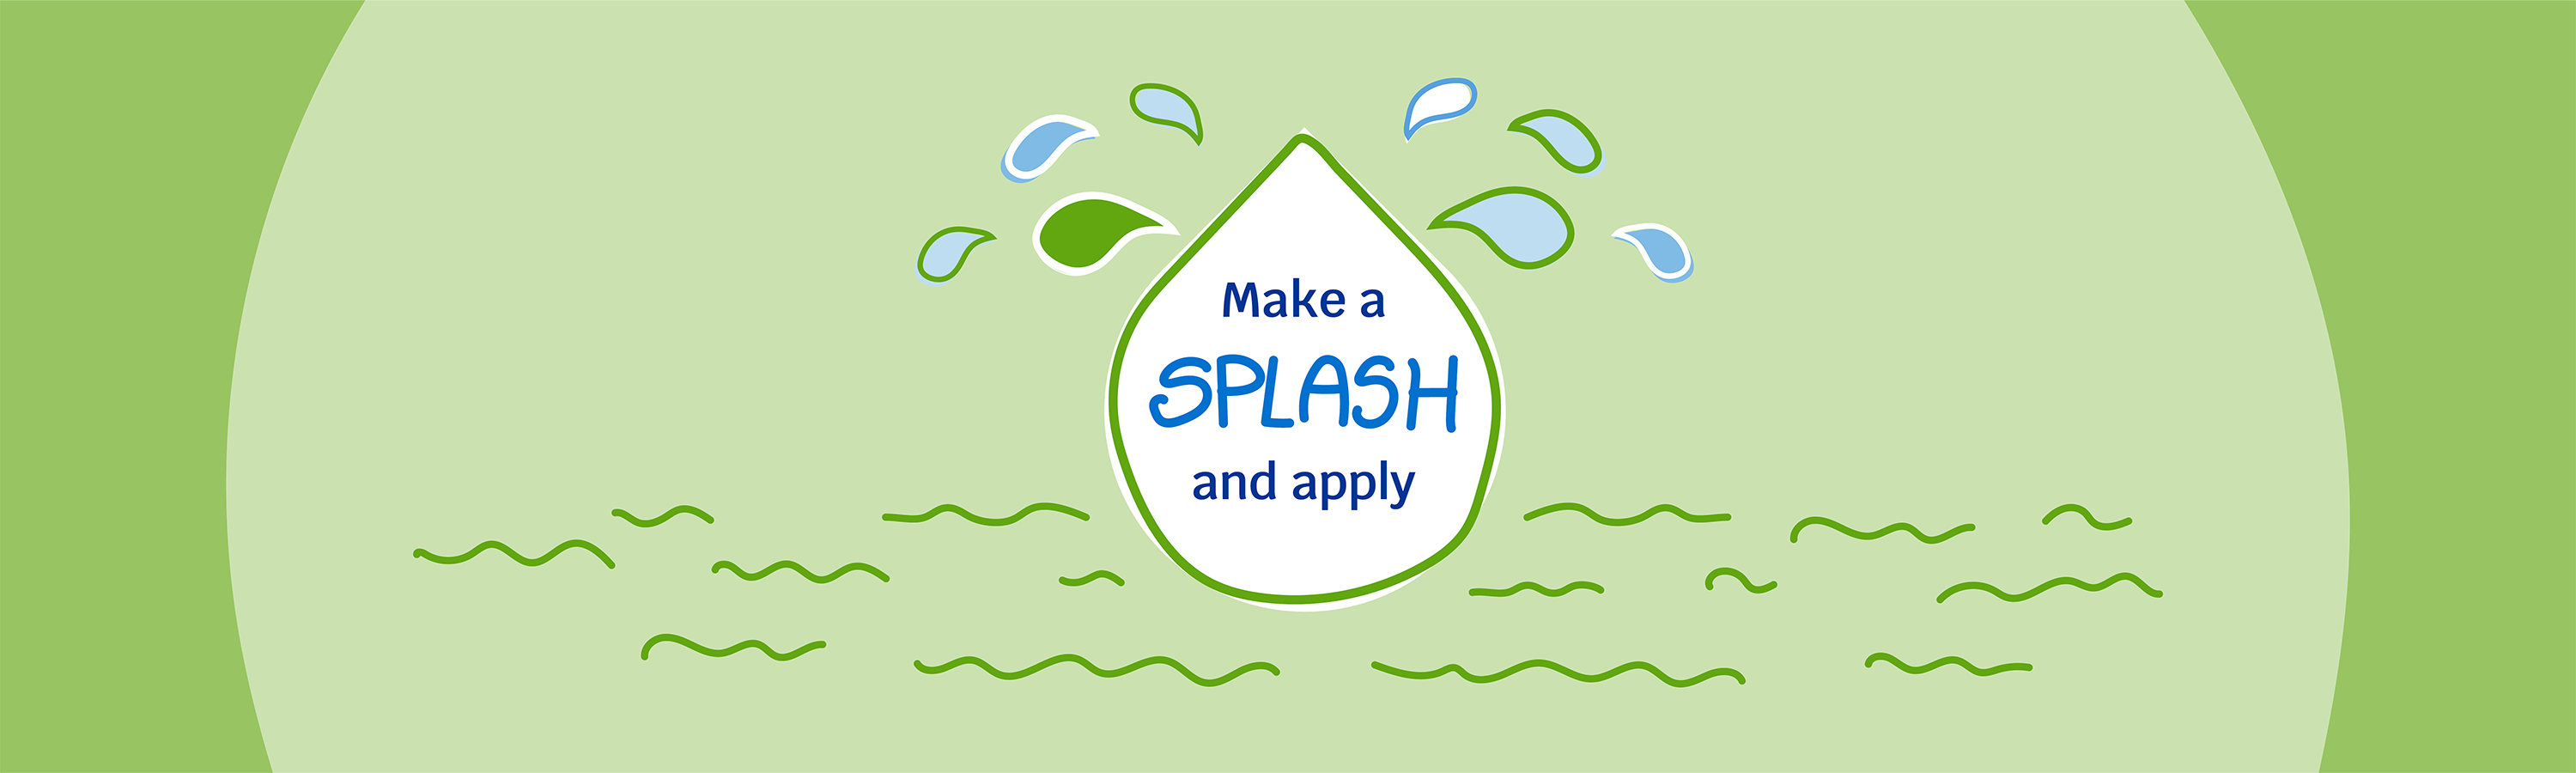 Splash web banner green